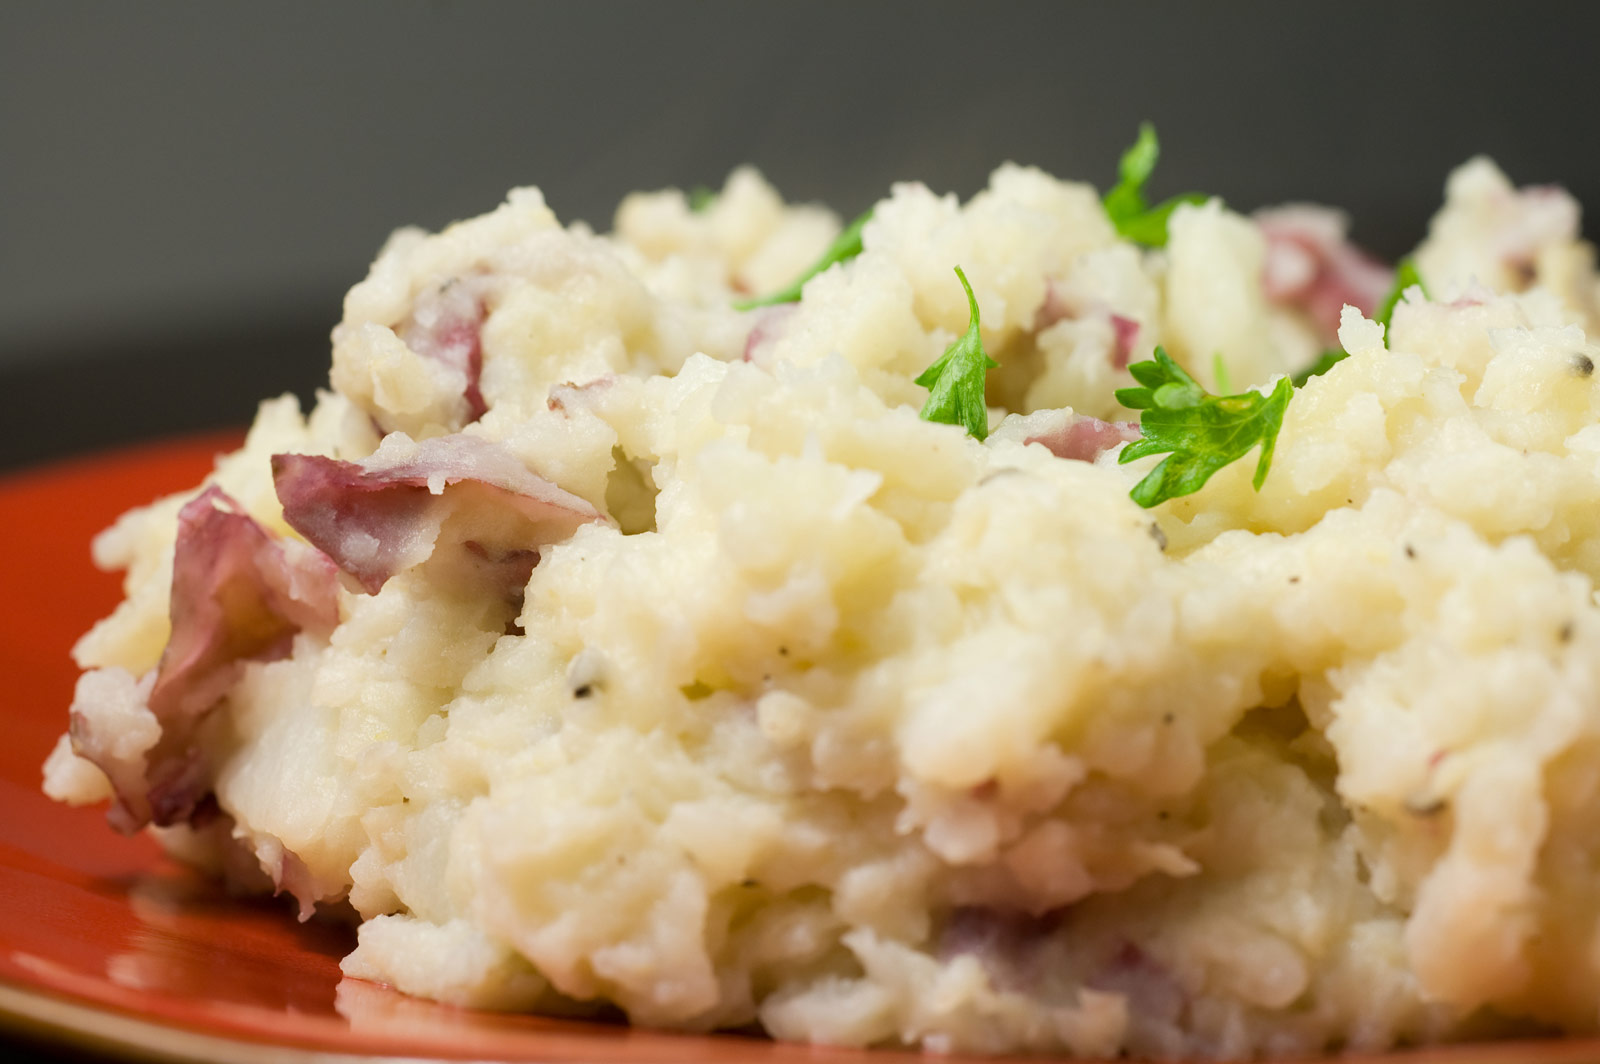 Applebee s Garlic Mashed Potatoes Recipe 3 8 5 